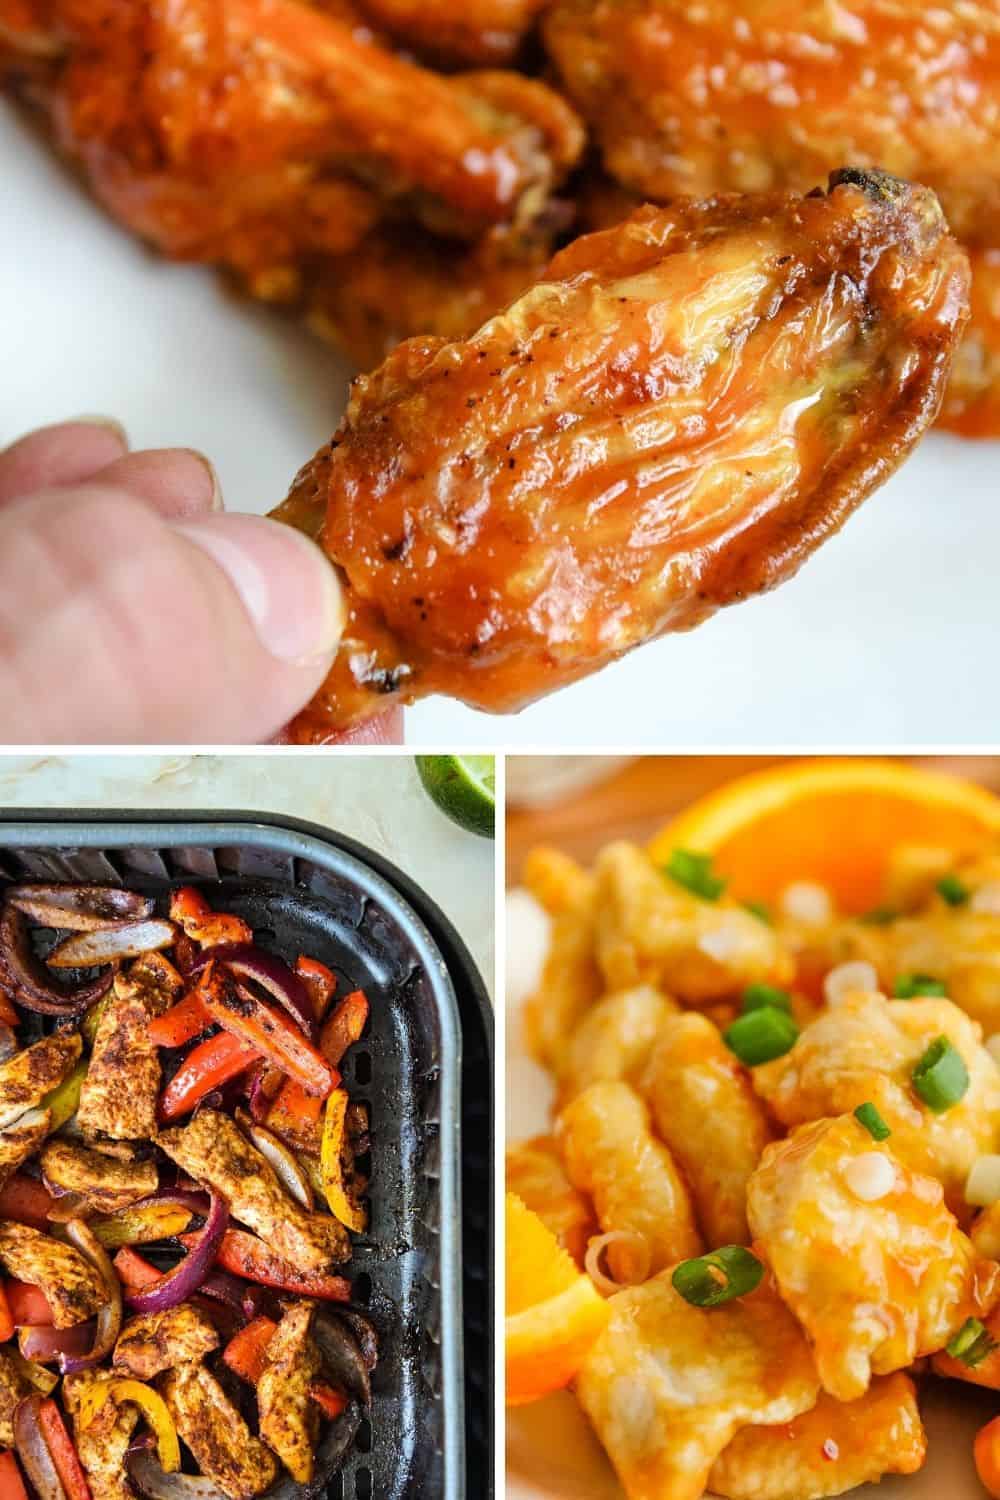 https://www.everydayfamilycooking.com/wp-content/uploads/2021/01/air-fryer-chicken-recipes.jpg